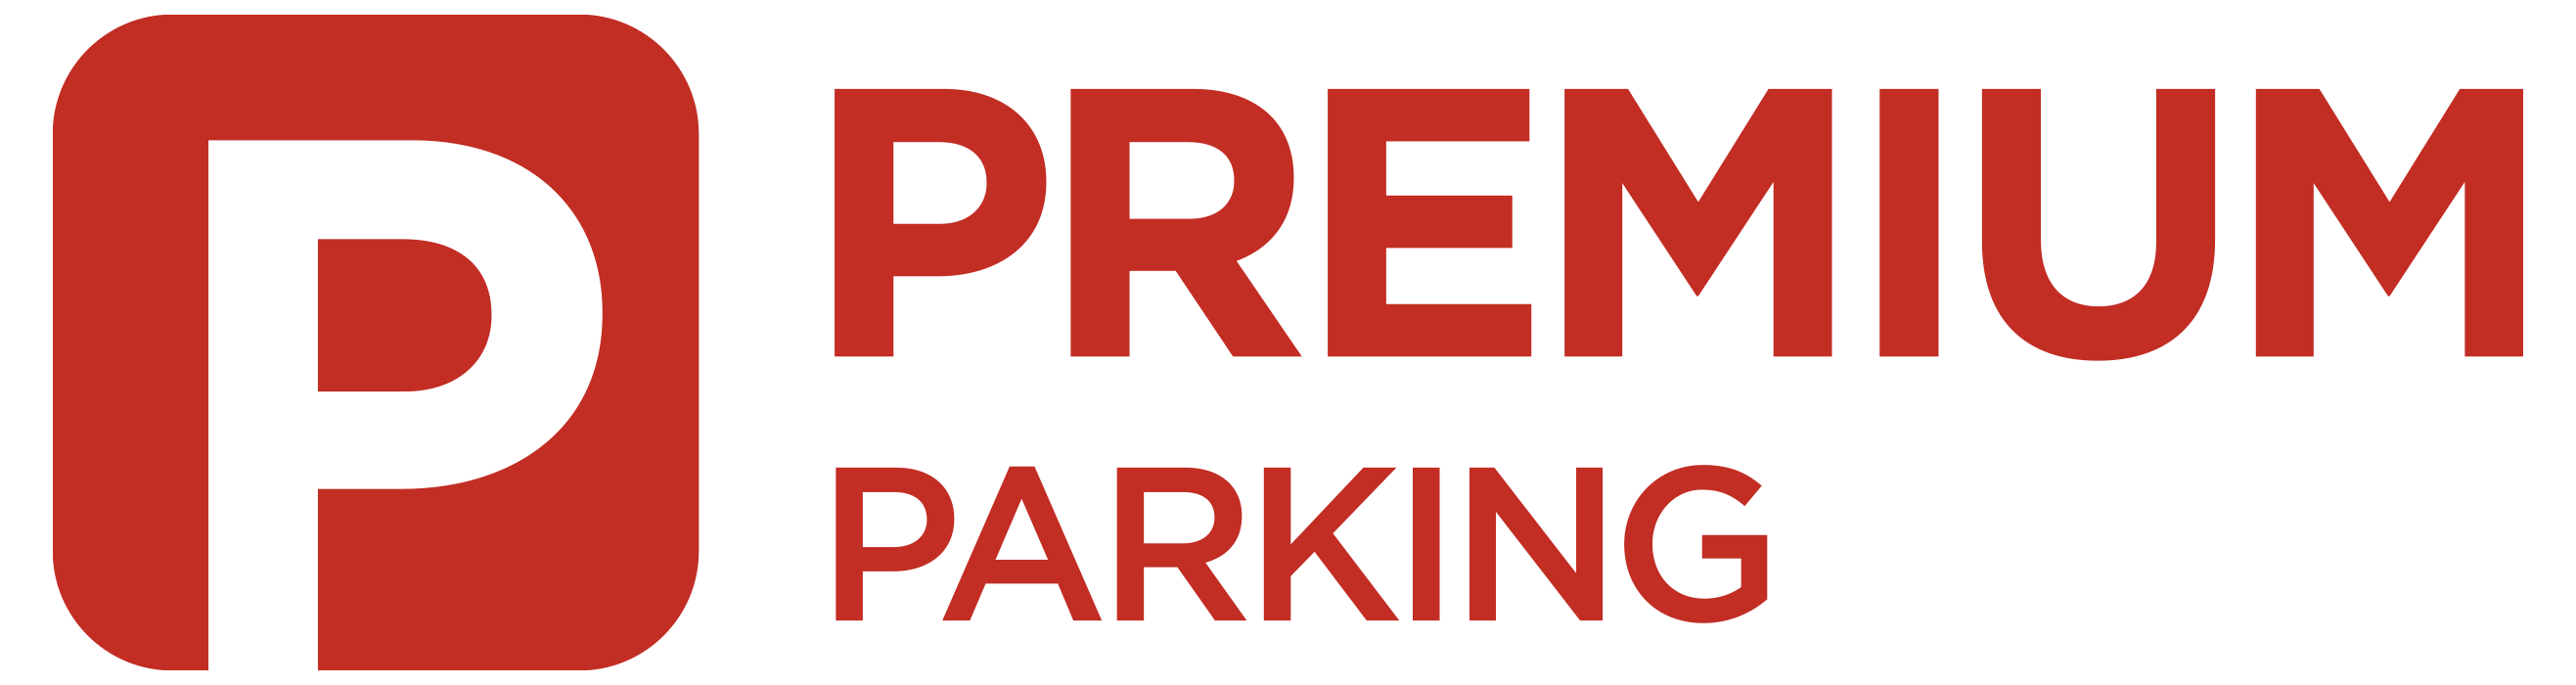 Premium Parking Service